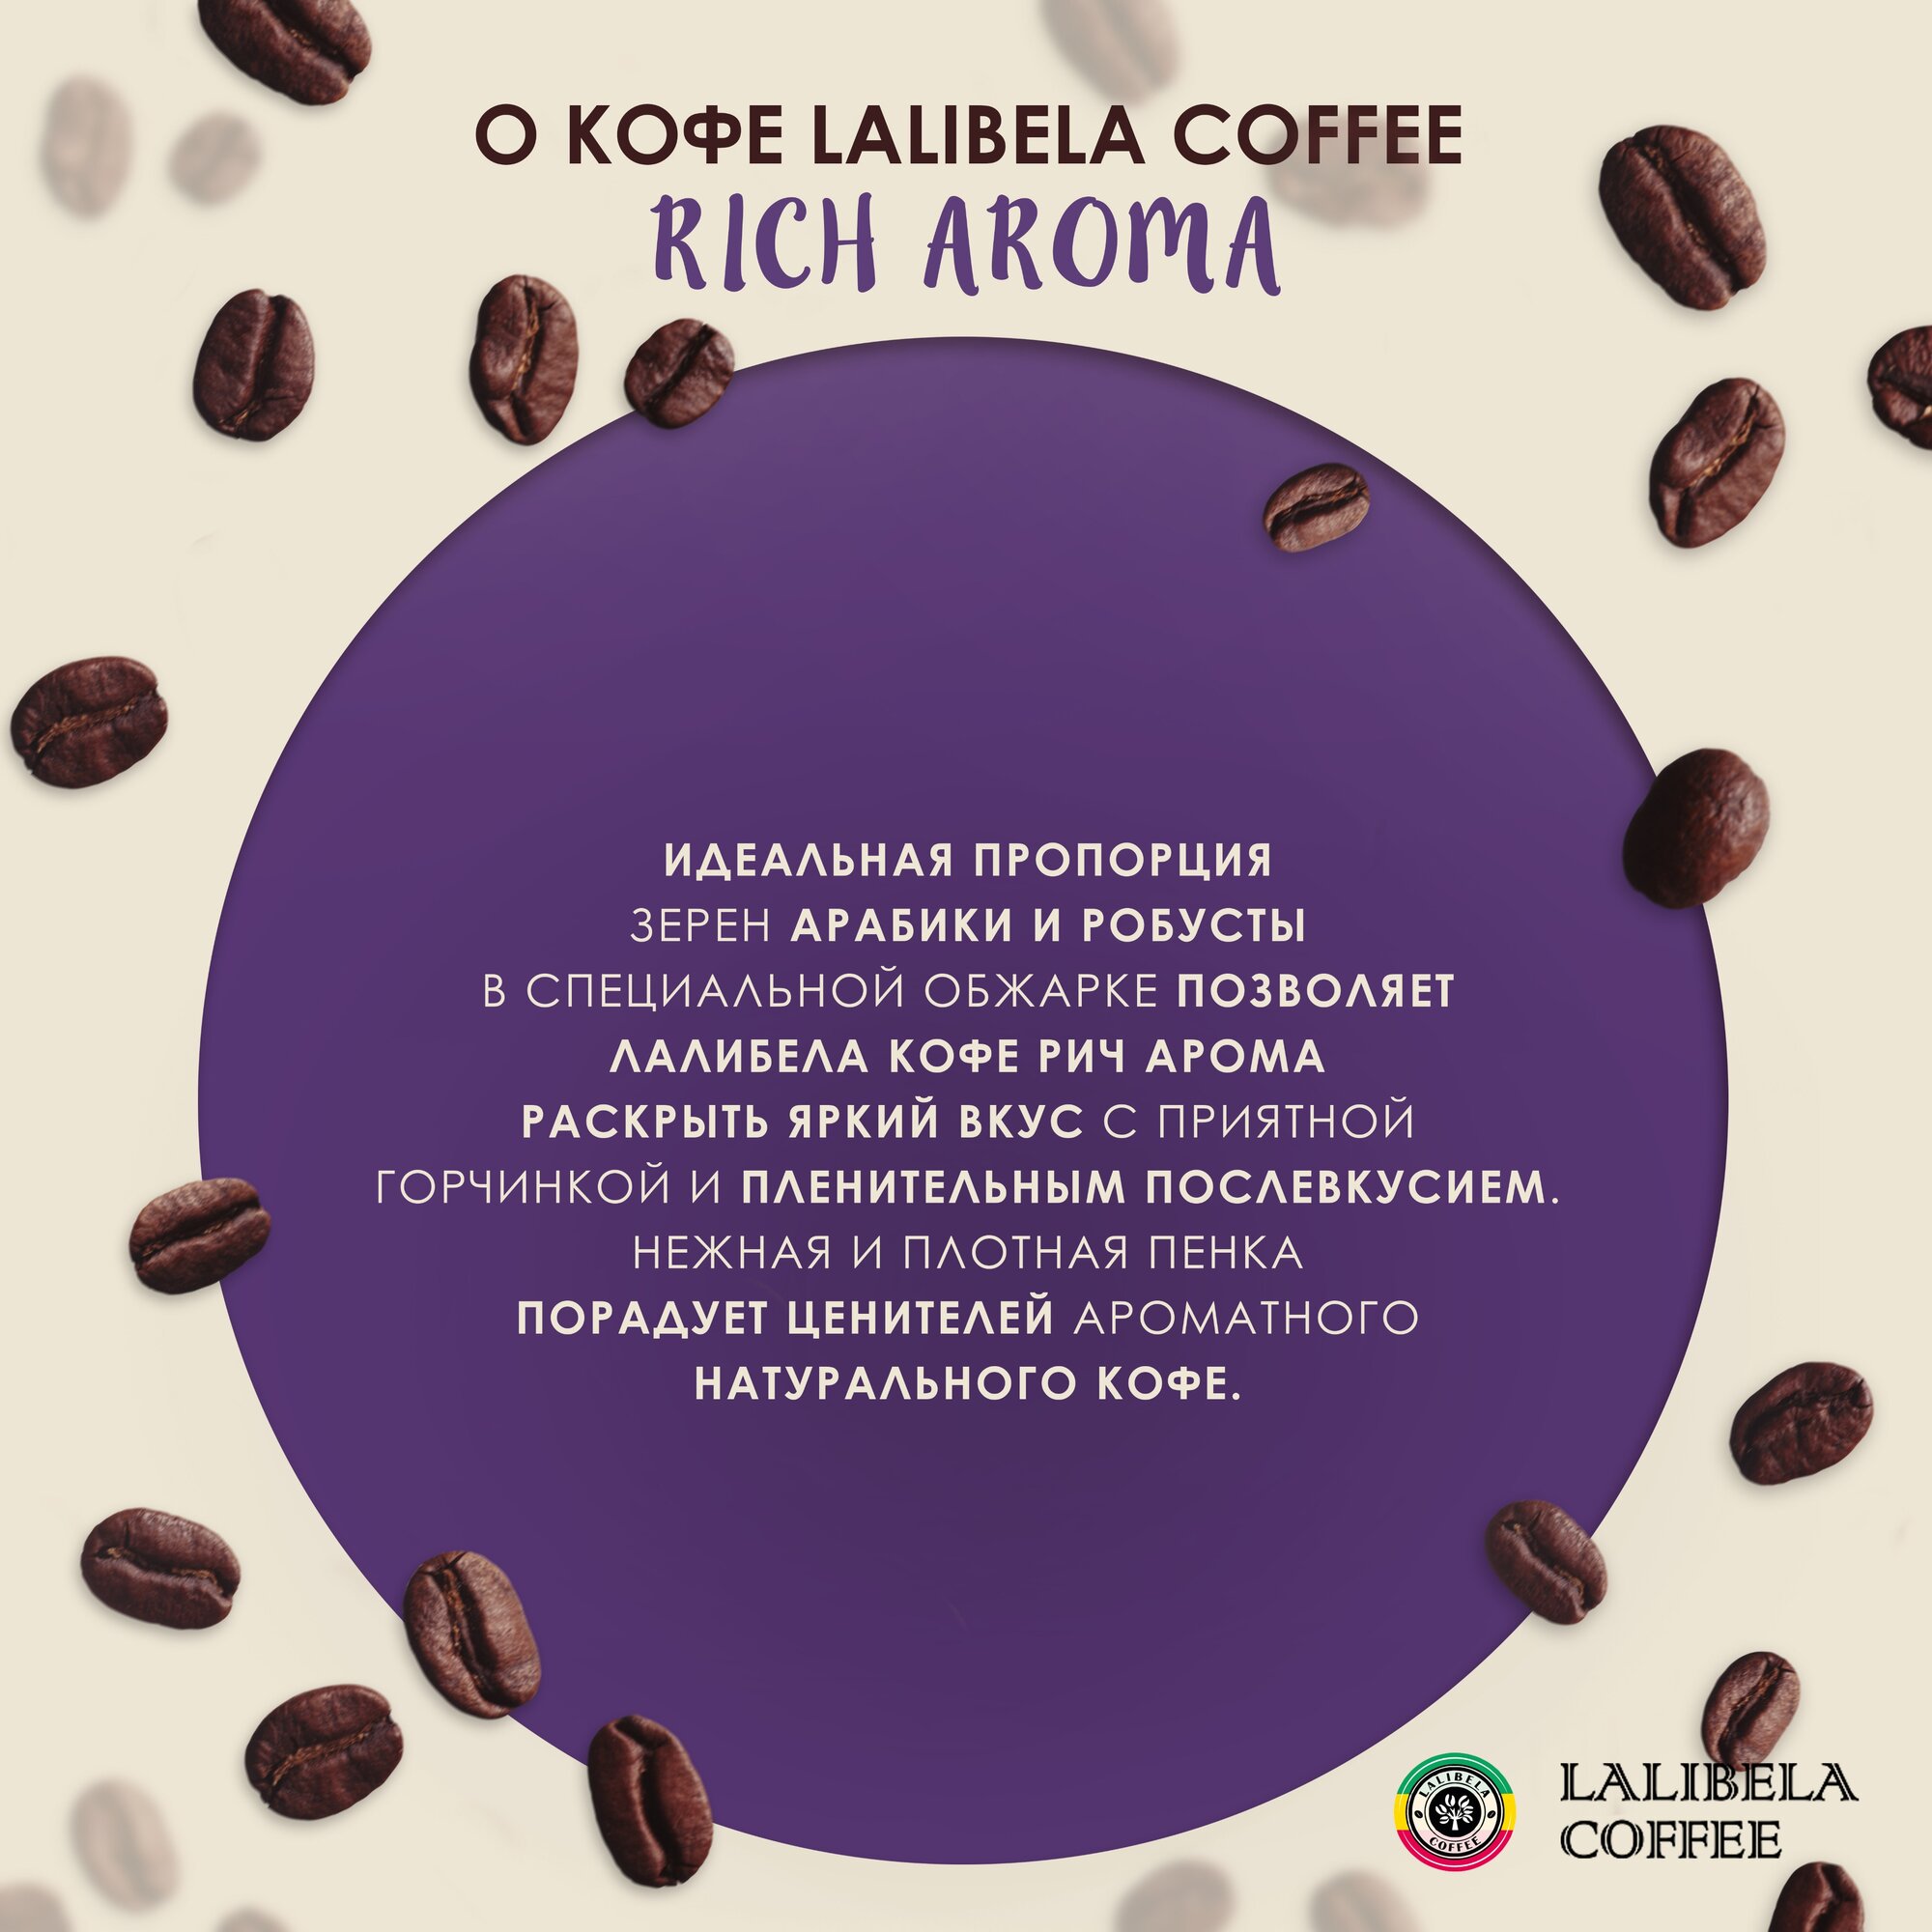 Набор кофе в зернах 1 кг LALIBELA COFFEE Espresso/ Classic/ Arabica/ Rich Aroma, (4 шт. по 250 гр)